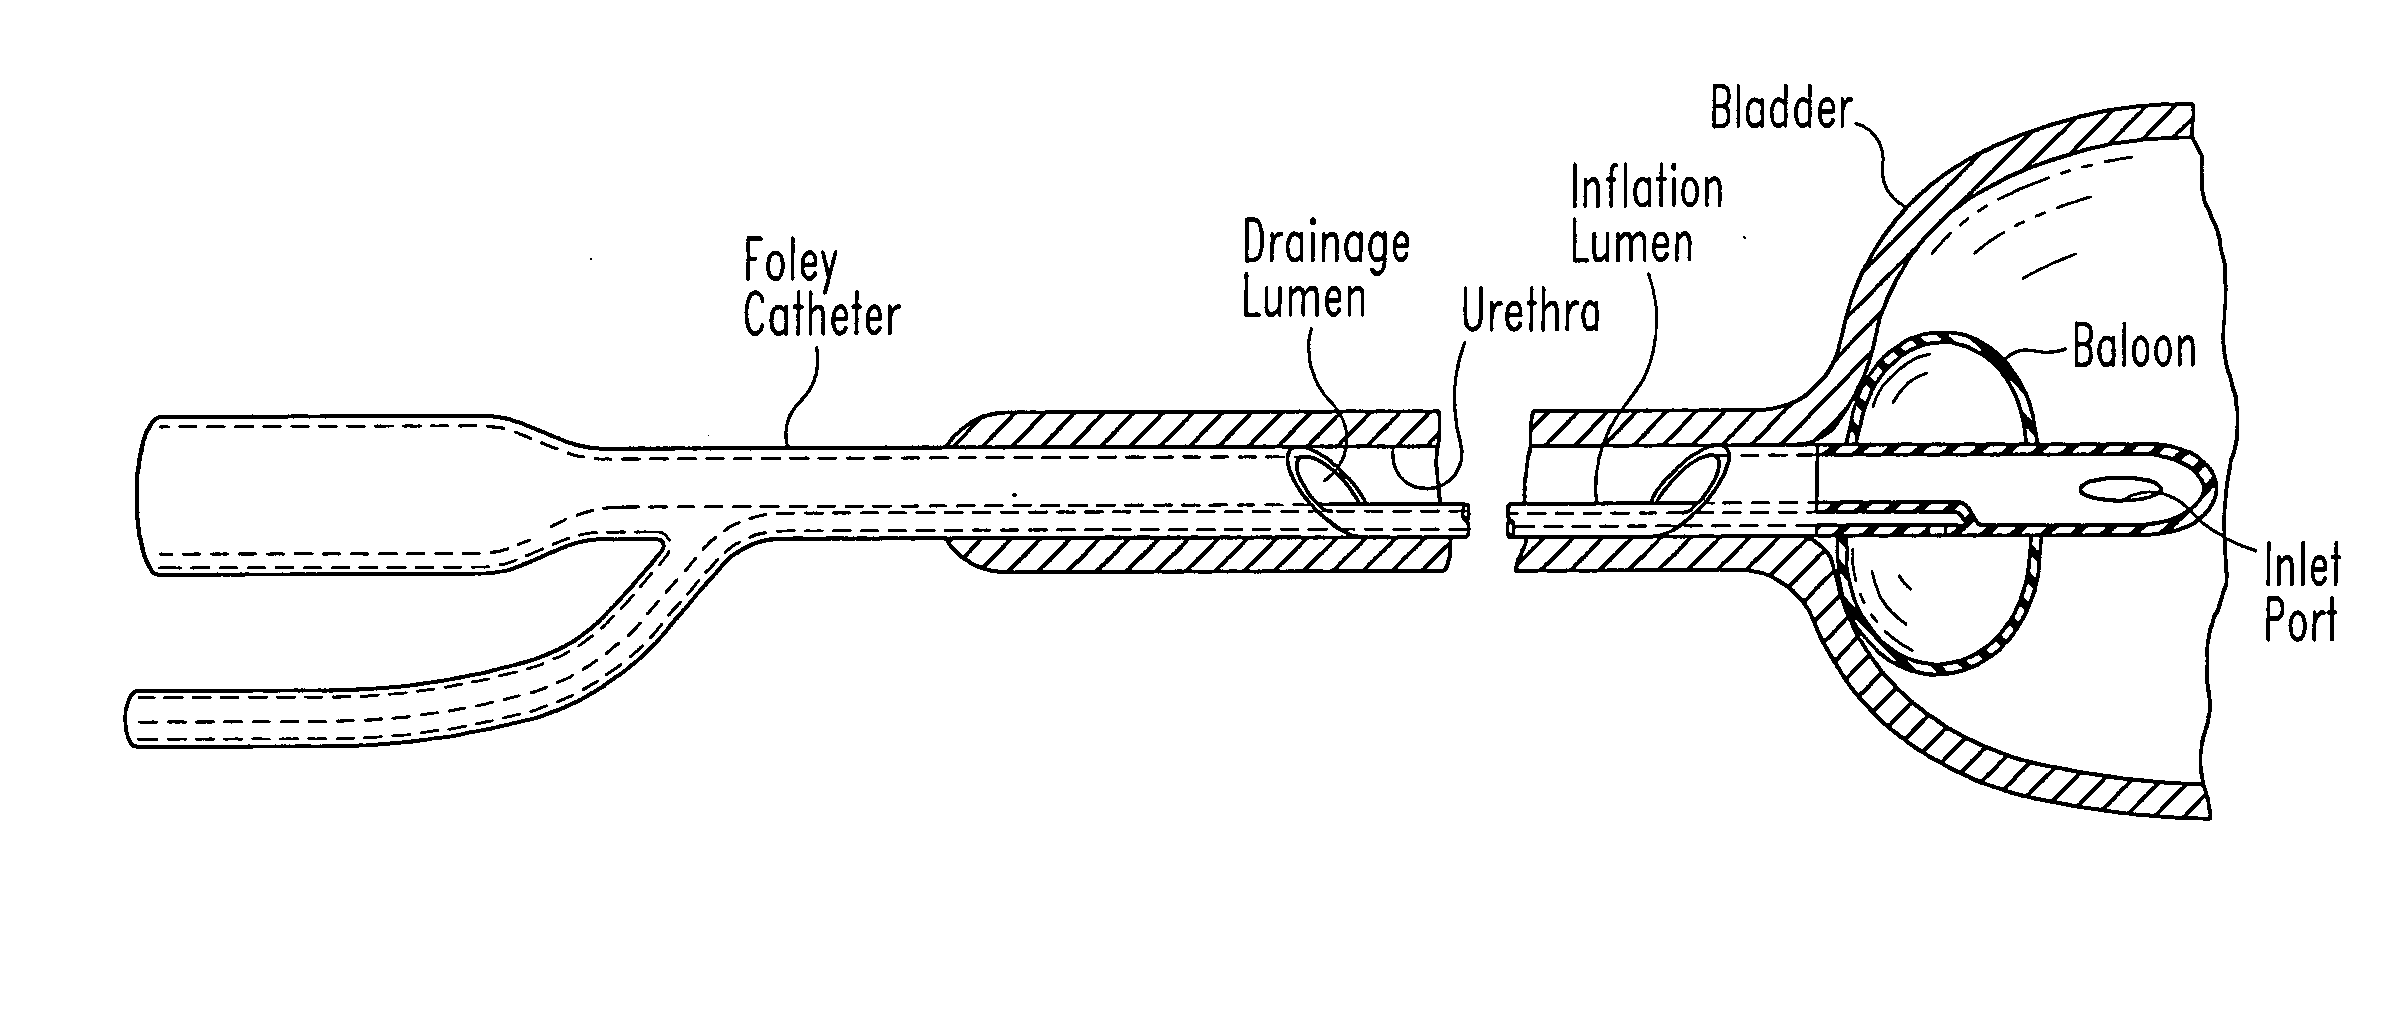 Self-Cleansing Bladder Drainage Catheter